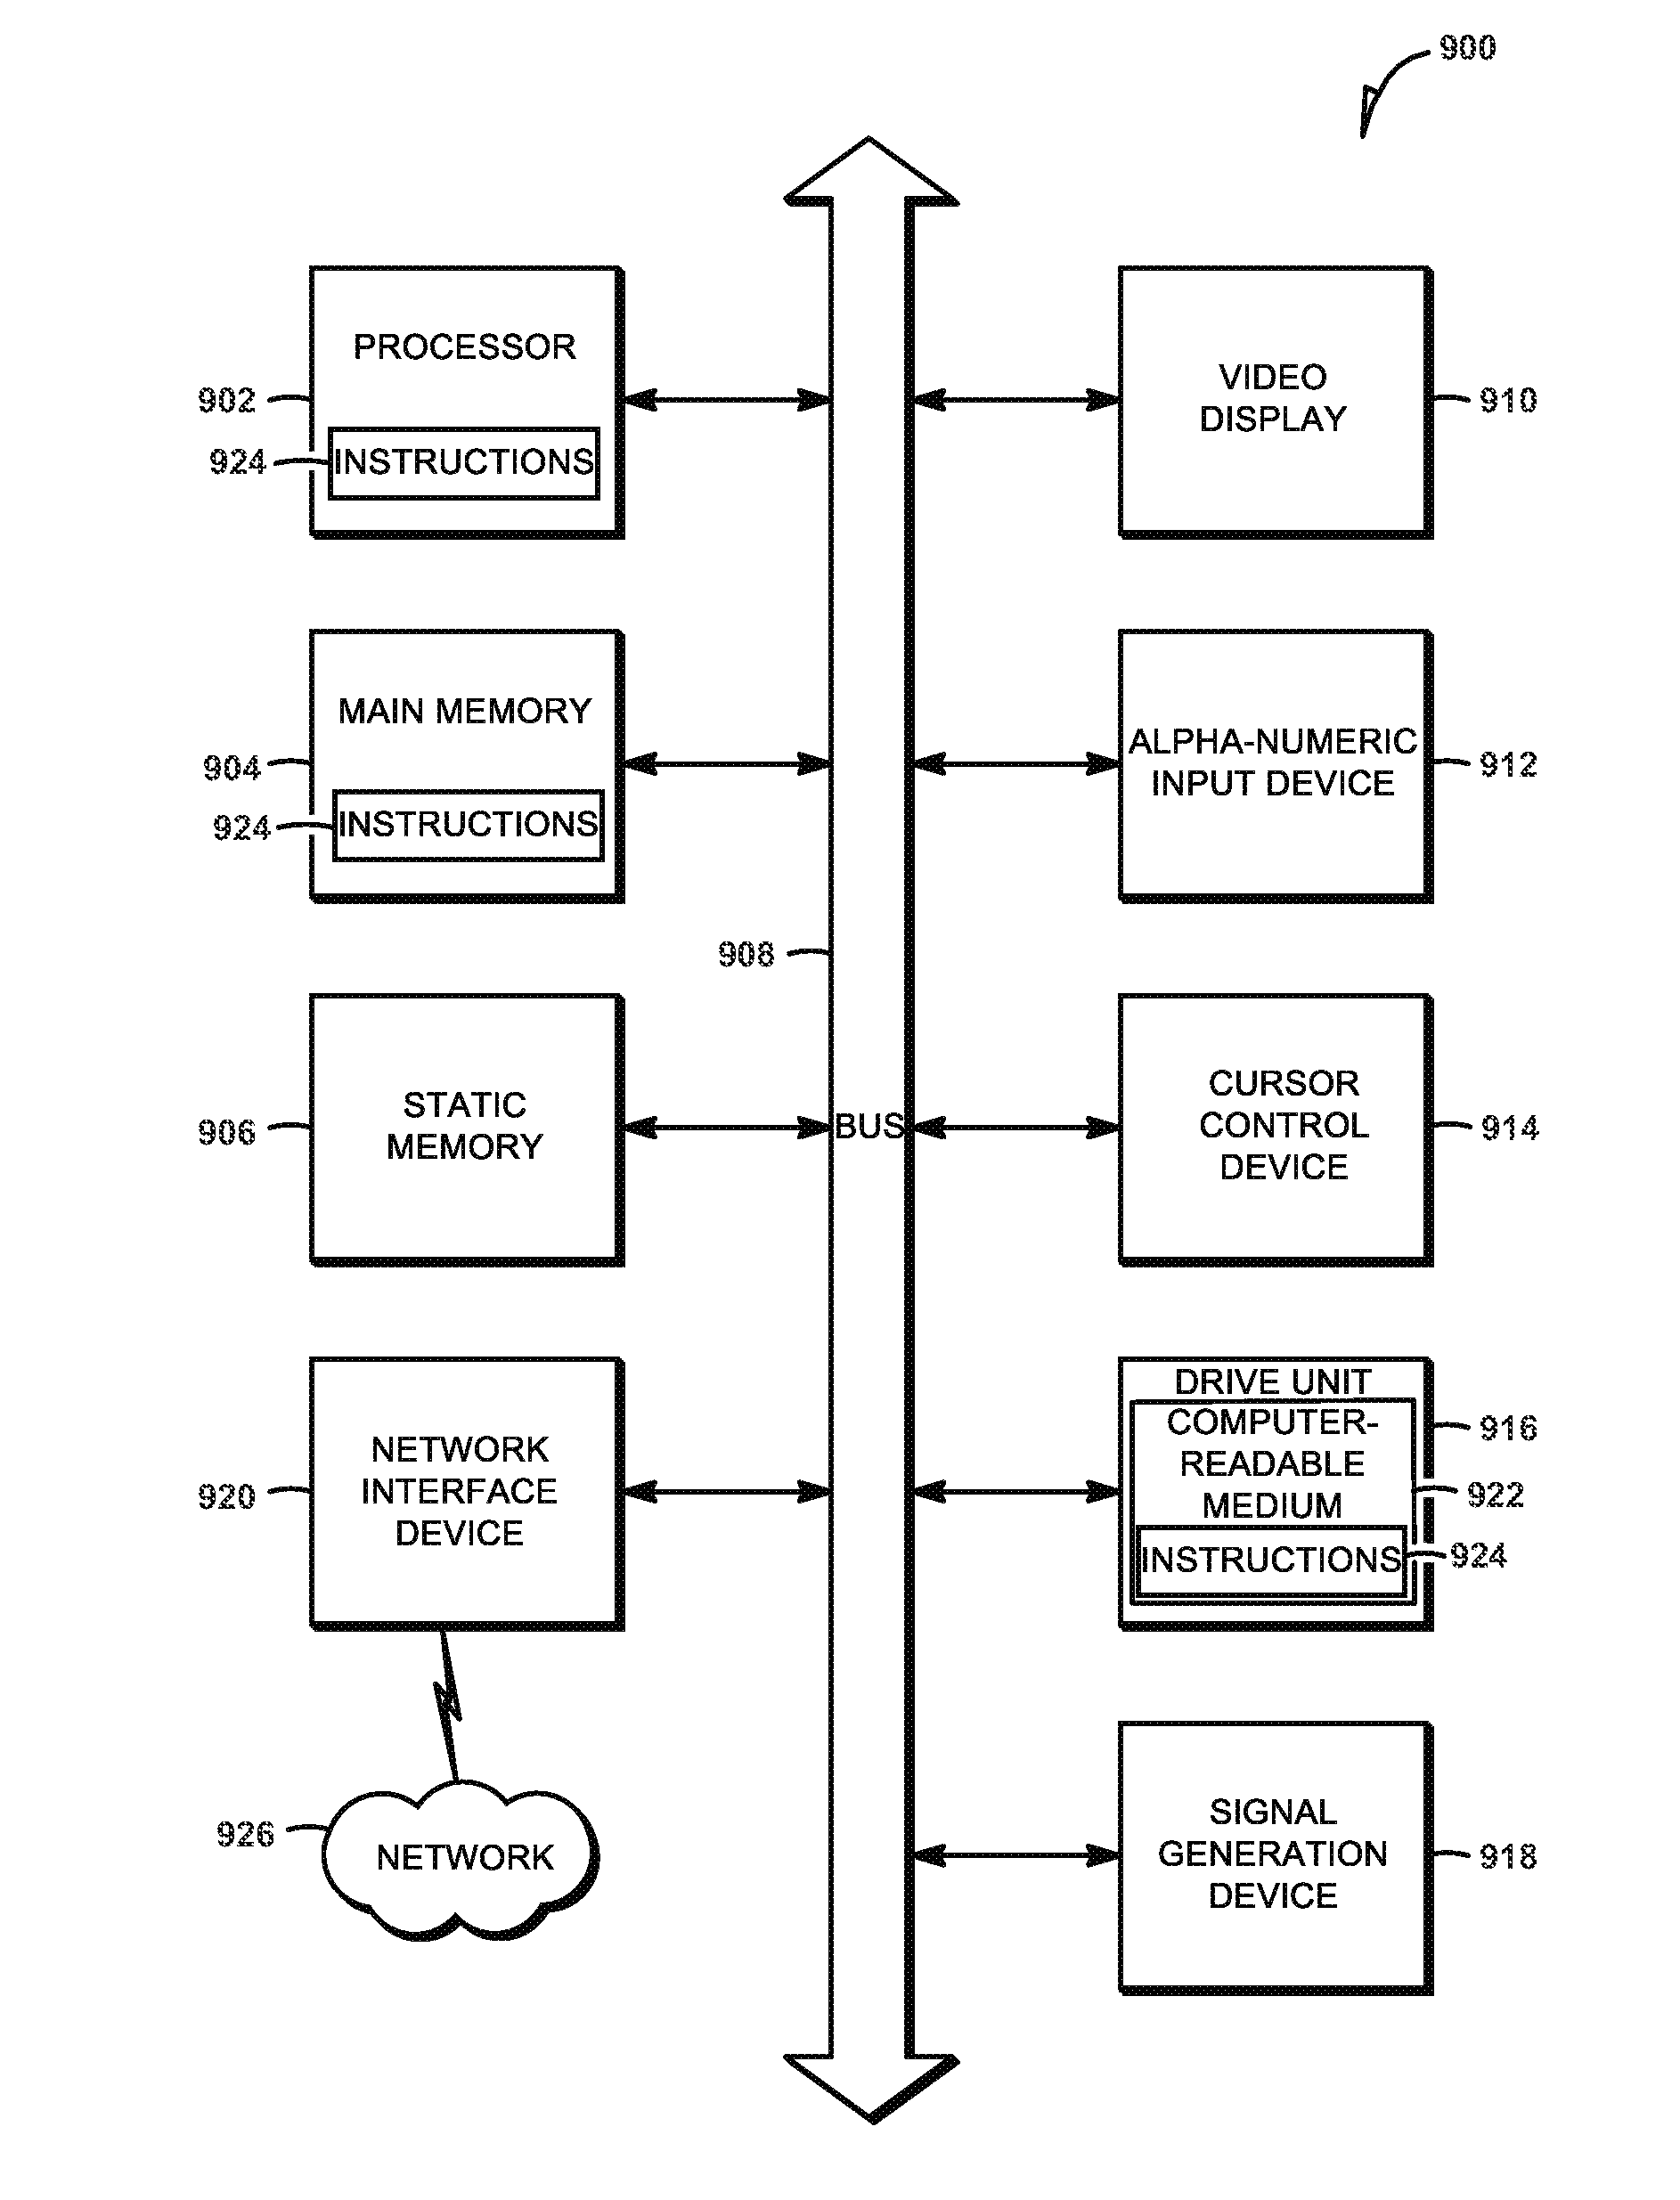 Computation of user reputation based on transaction graph